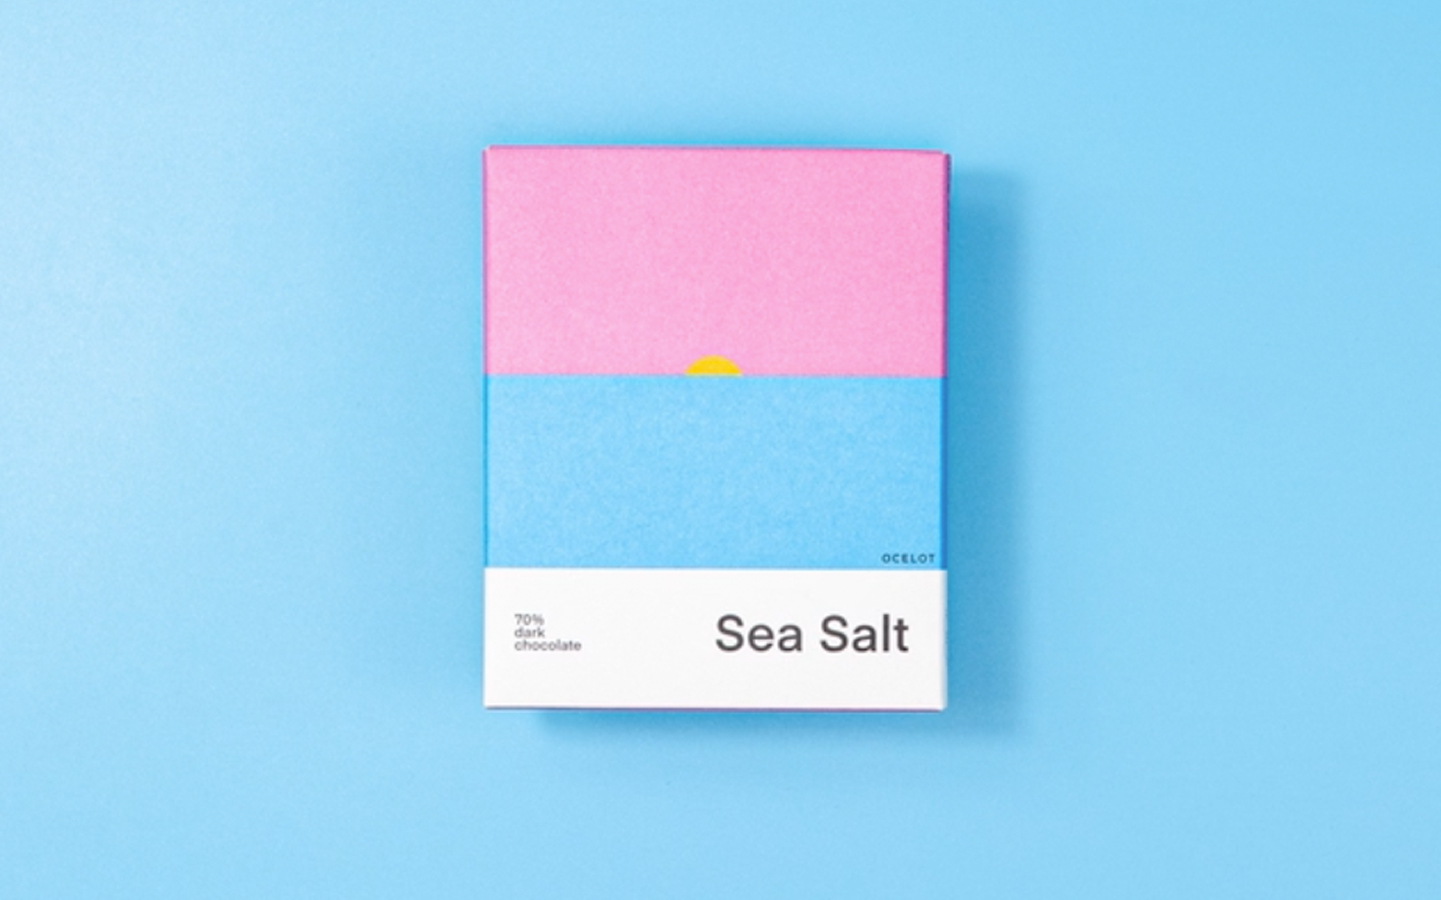 Sea Salt Ocelot